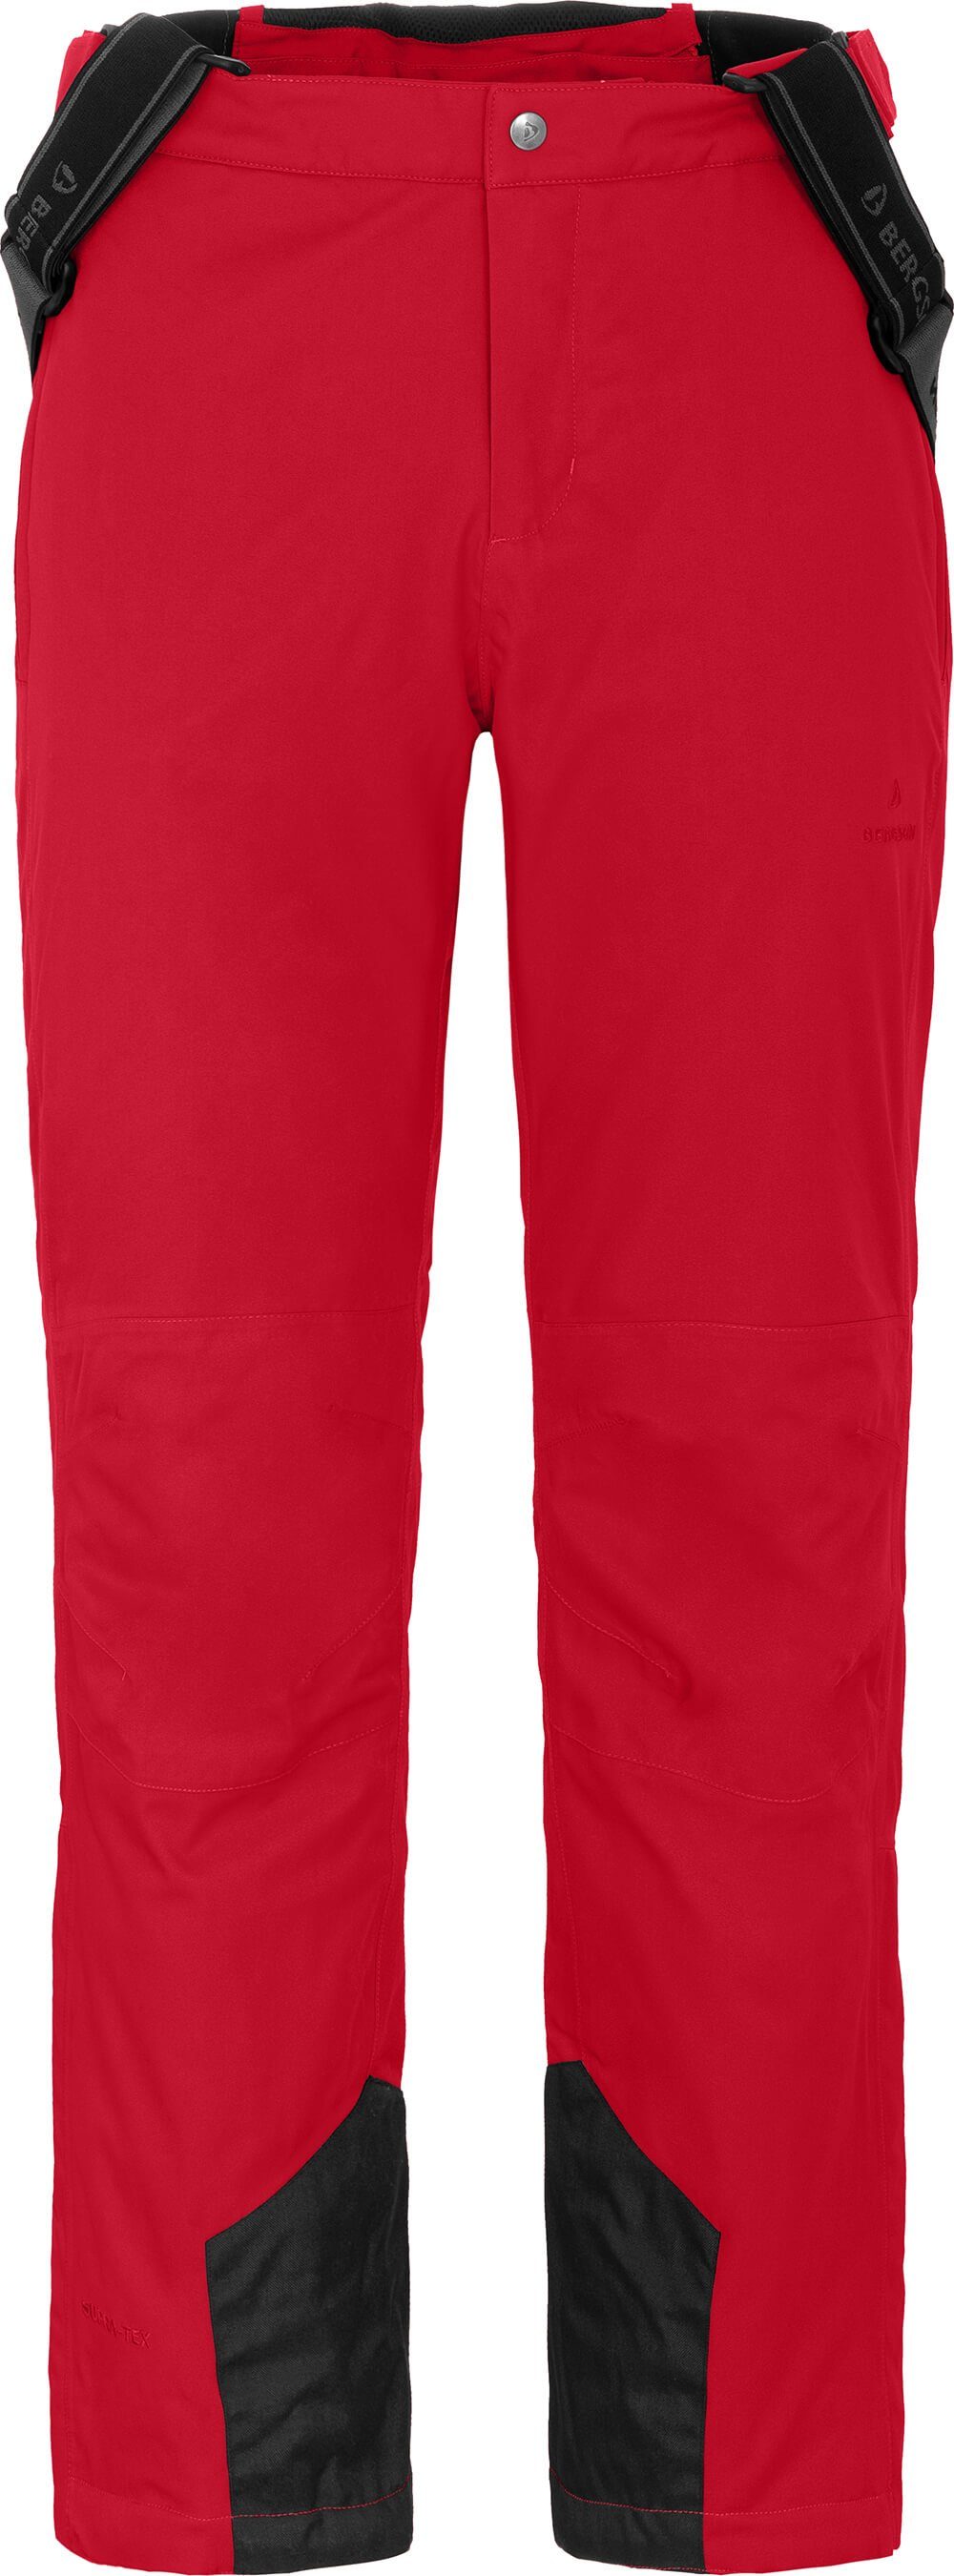 Bergson Skihose FROSTY RACE Herren Skihose, elastisch, 12000 mm Wassersäule, Kurzgrößen, China rot